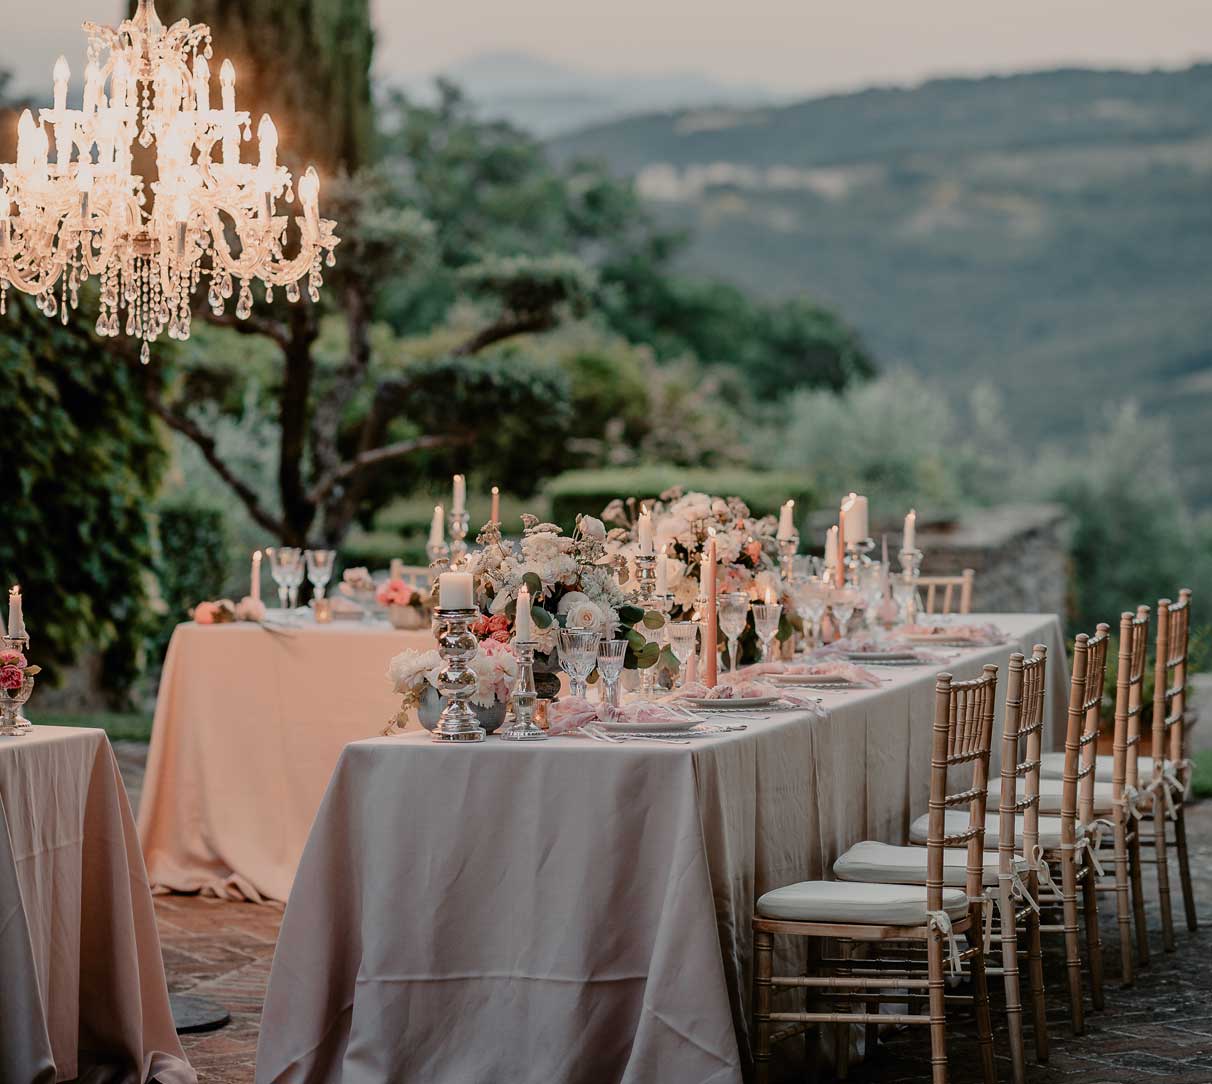 Panorama wedding table - al fresco wedding dinner in Umbria